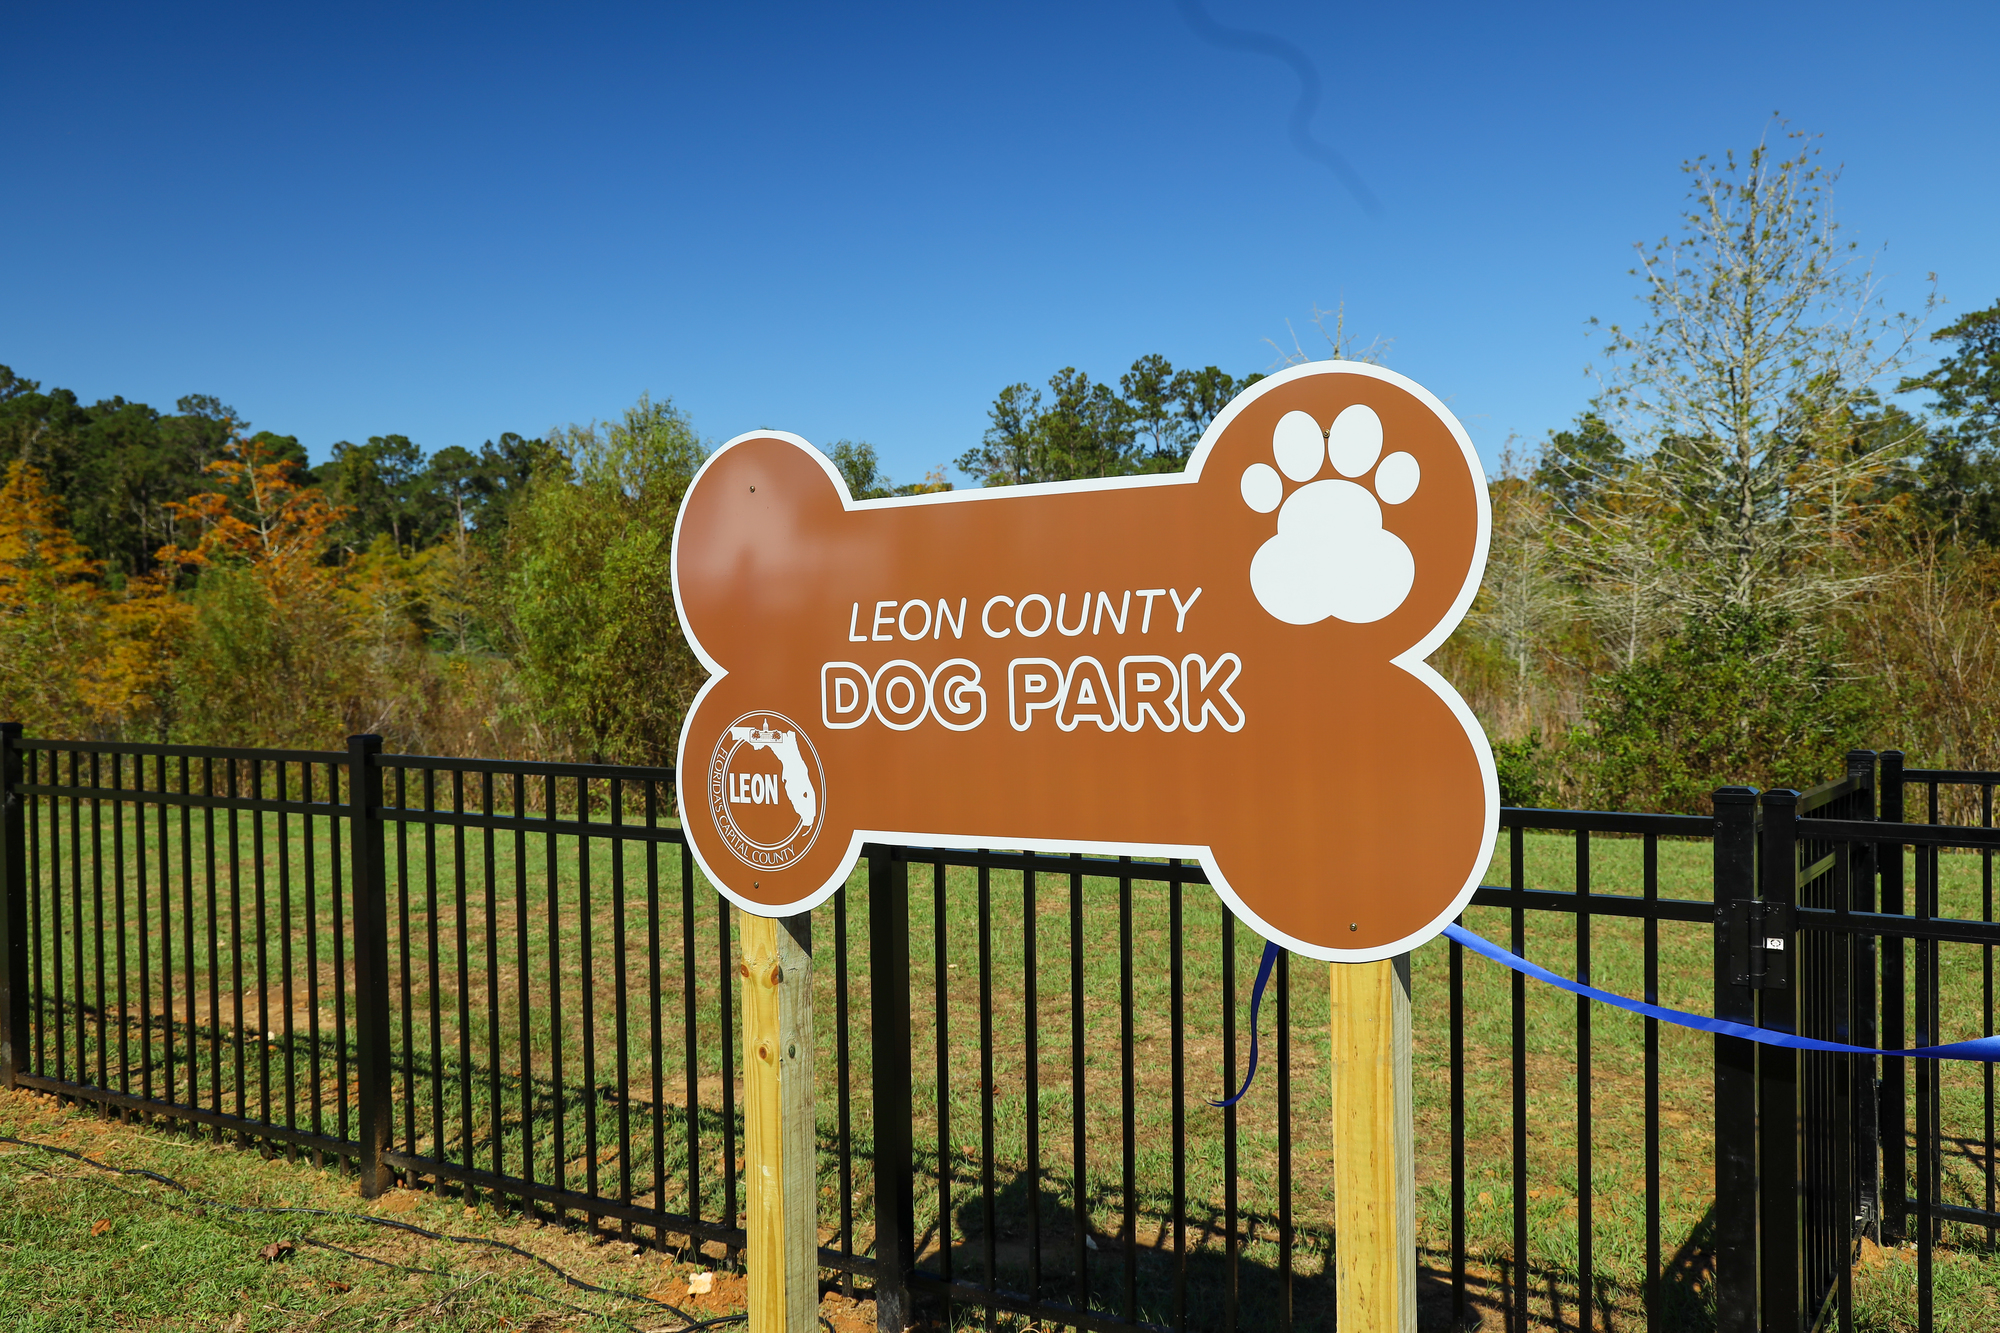 Leon County Dog Park